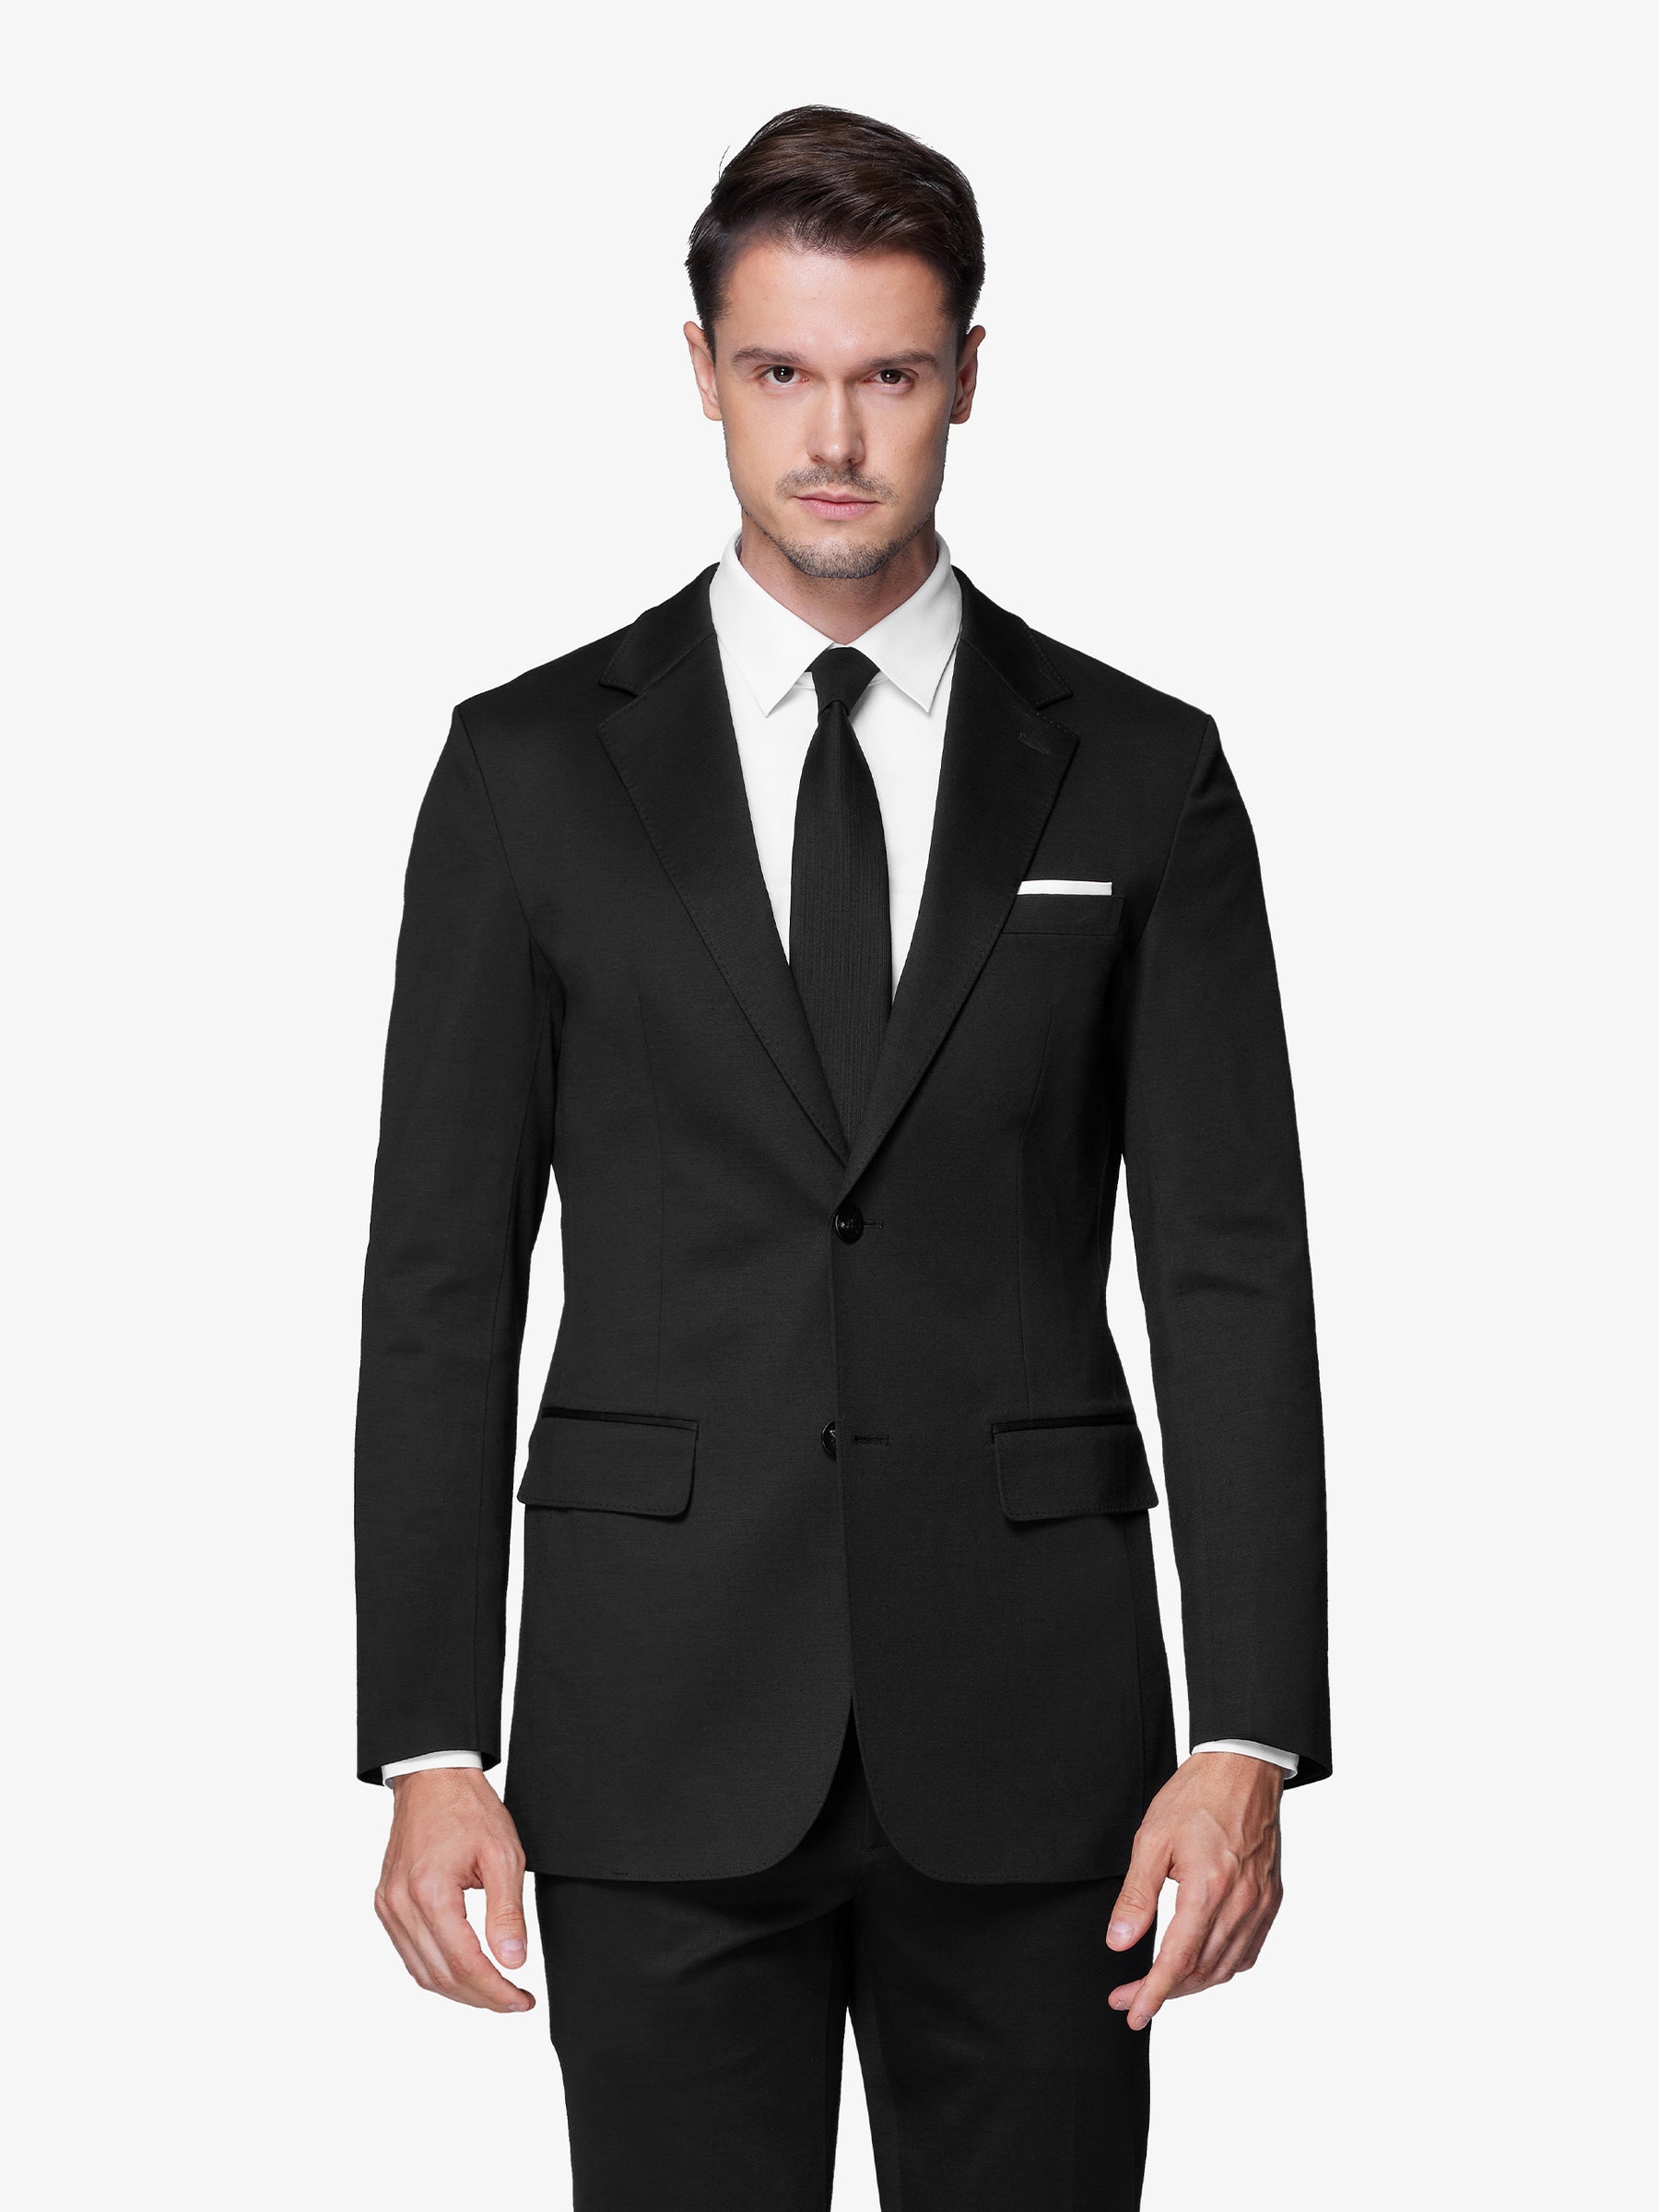 1 Black Suit - 5 Outfit Ideas - YouTube